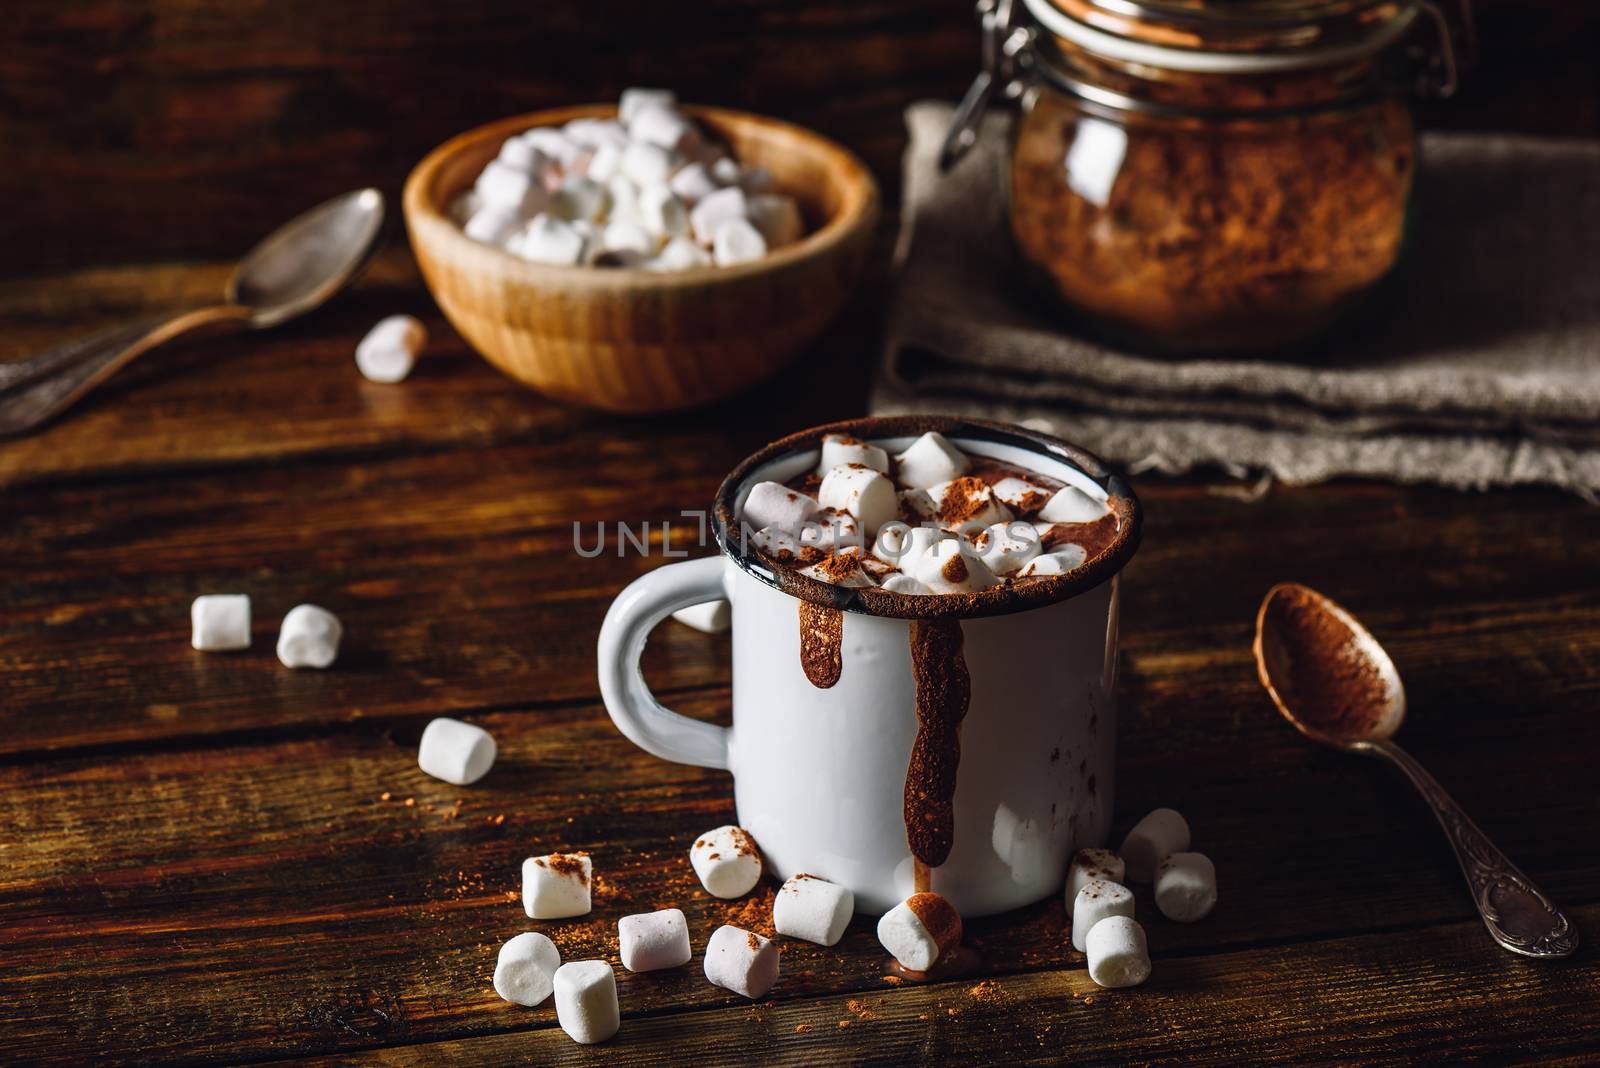 Metal Mug of Cocoa with Marshmallows. by Seva_blsv